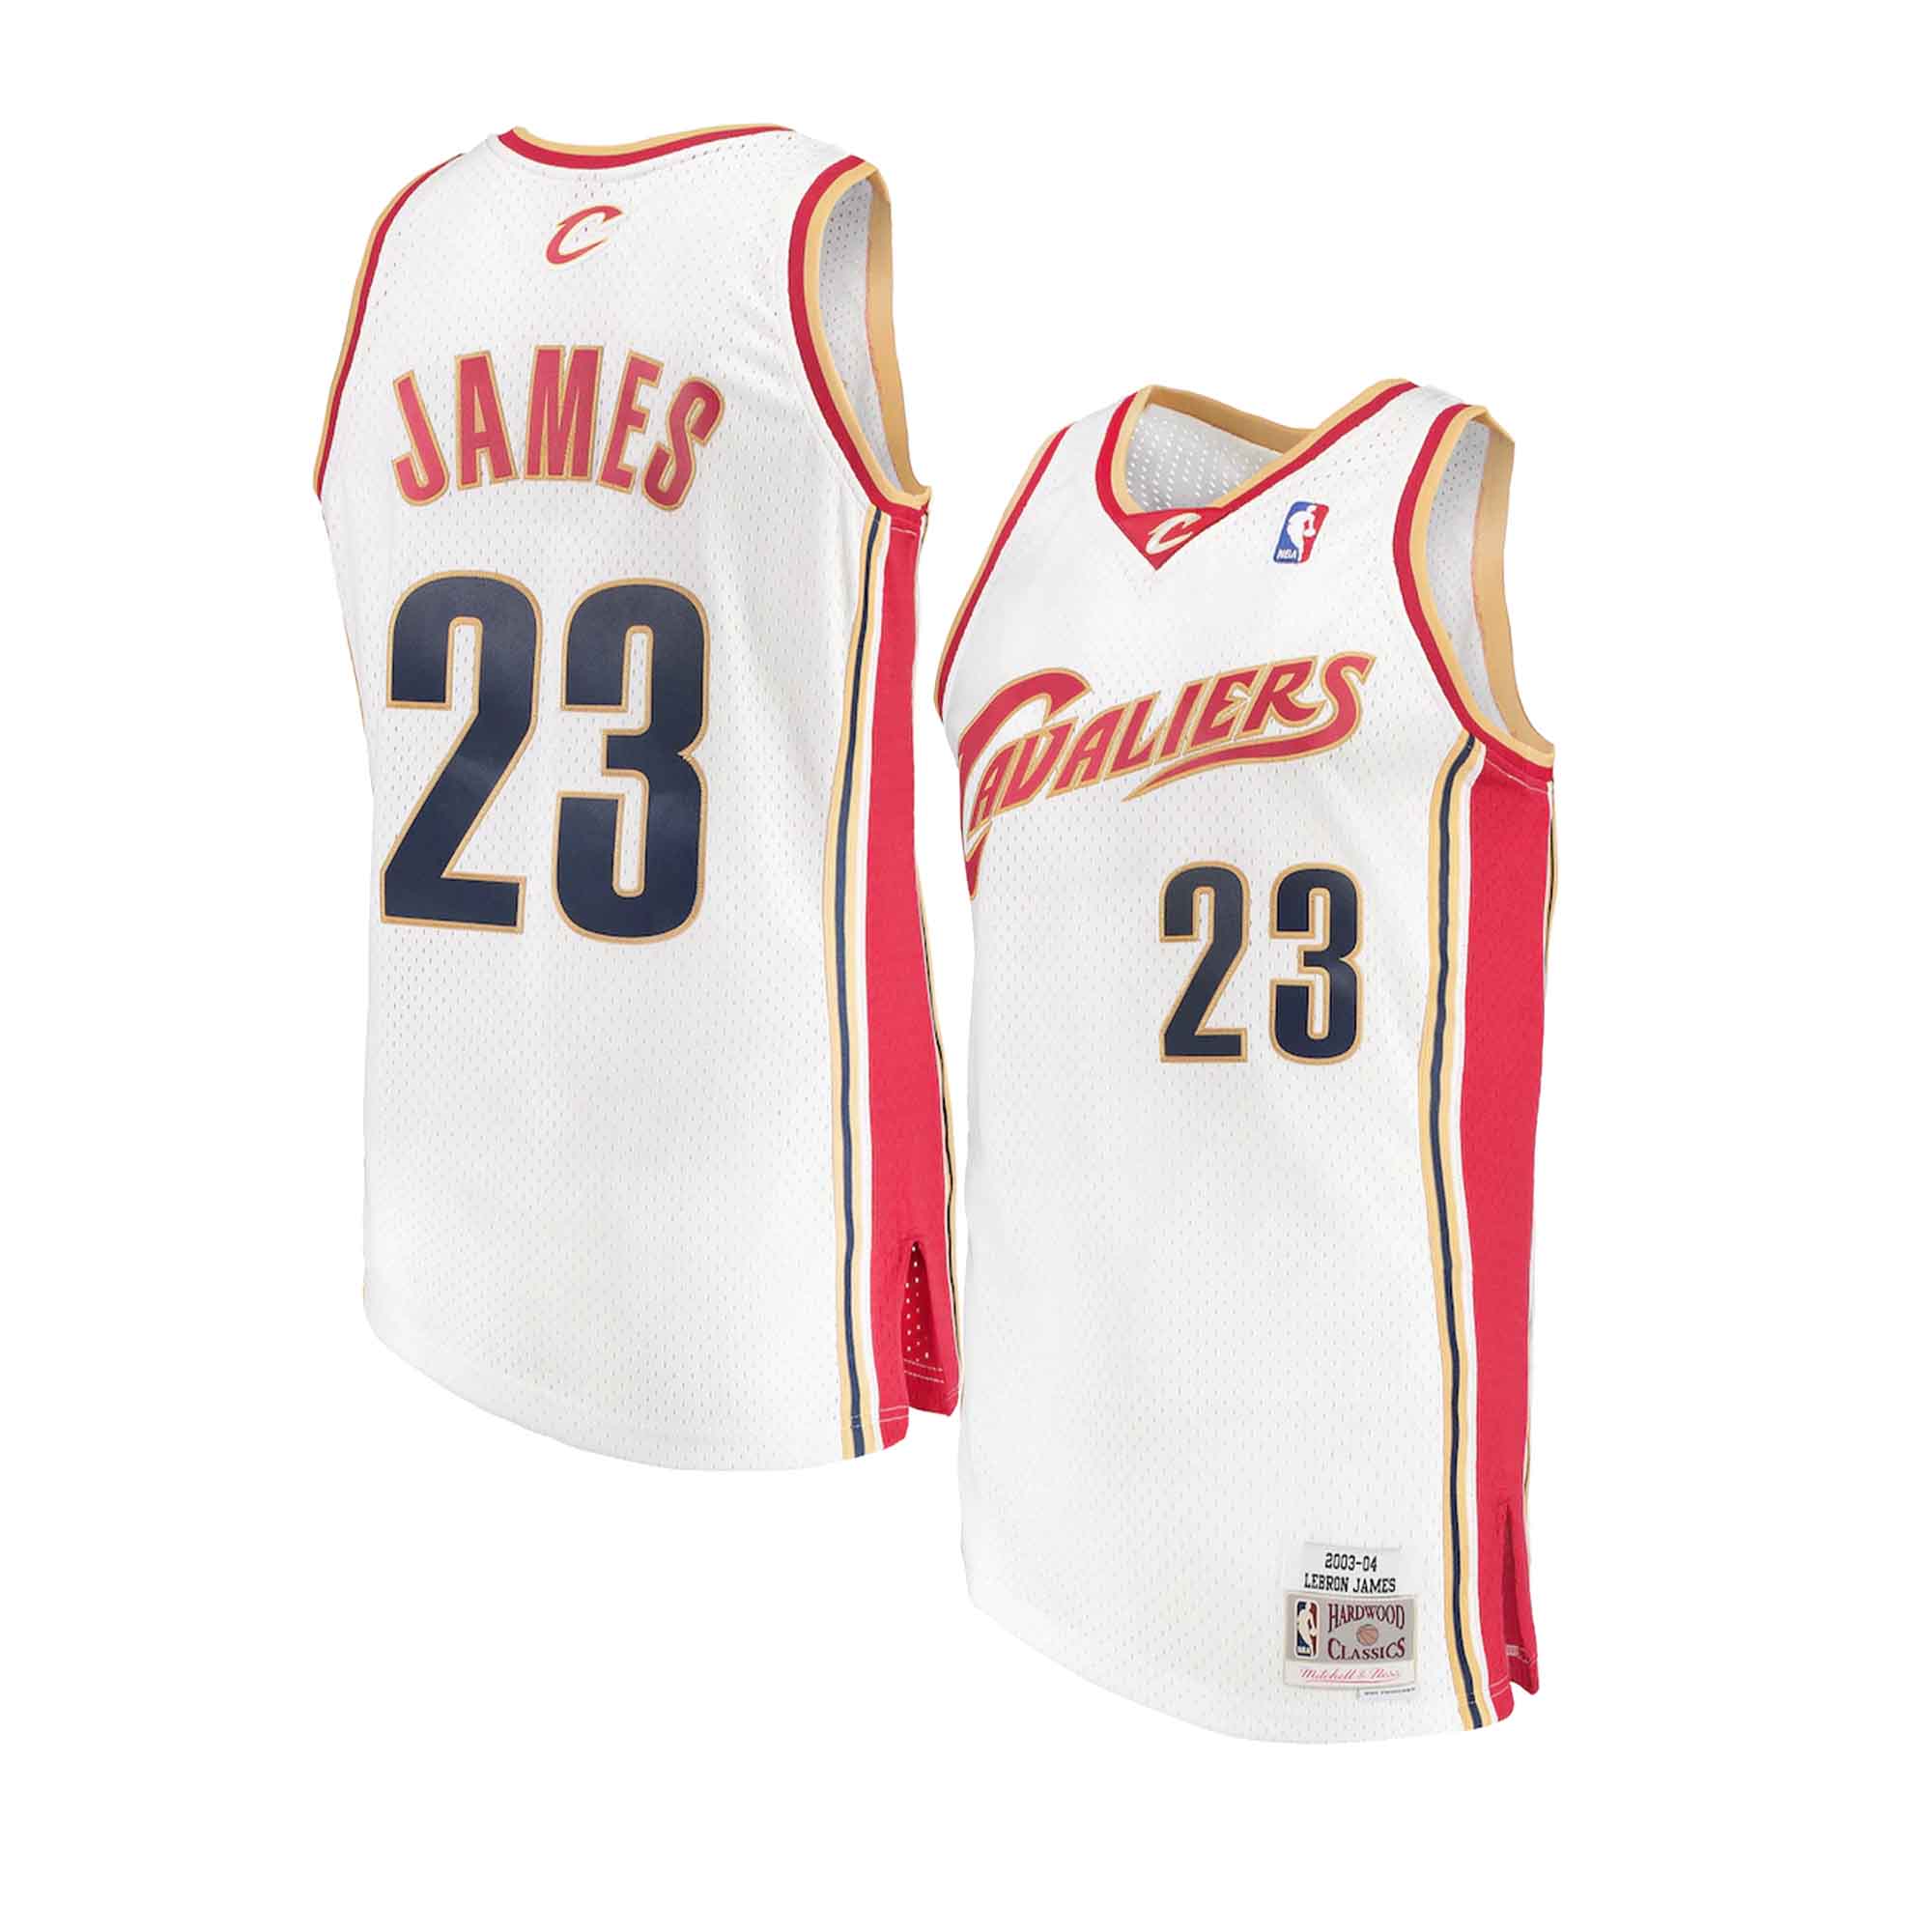 ANY LeBron James Jersey - Including Customs — SportsWRLDD